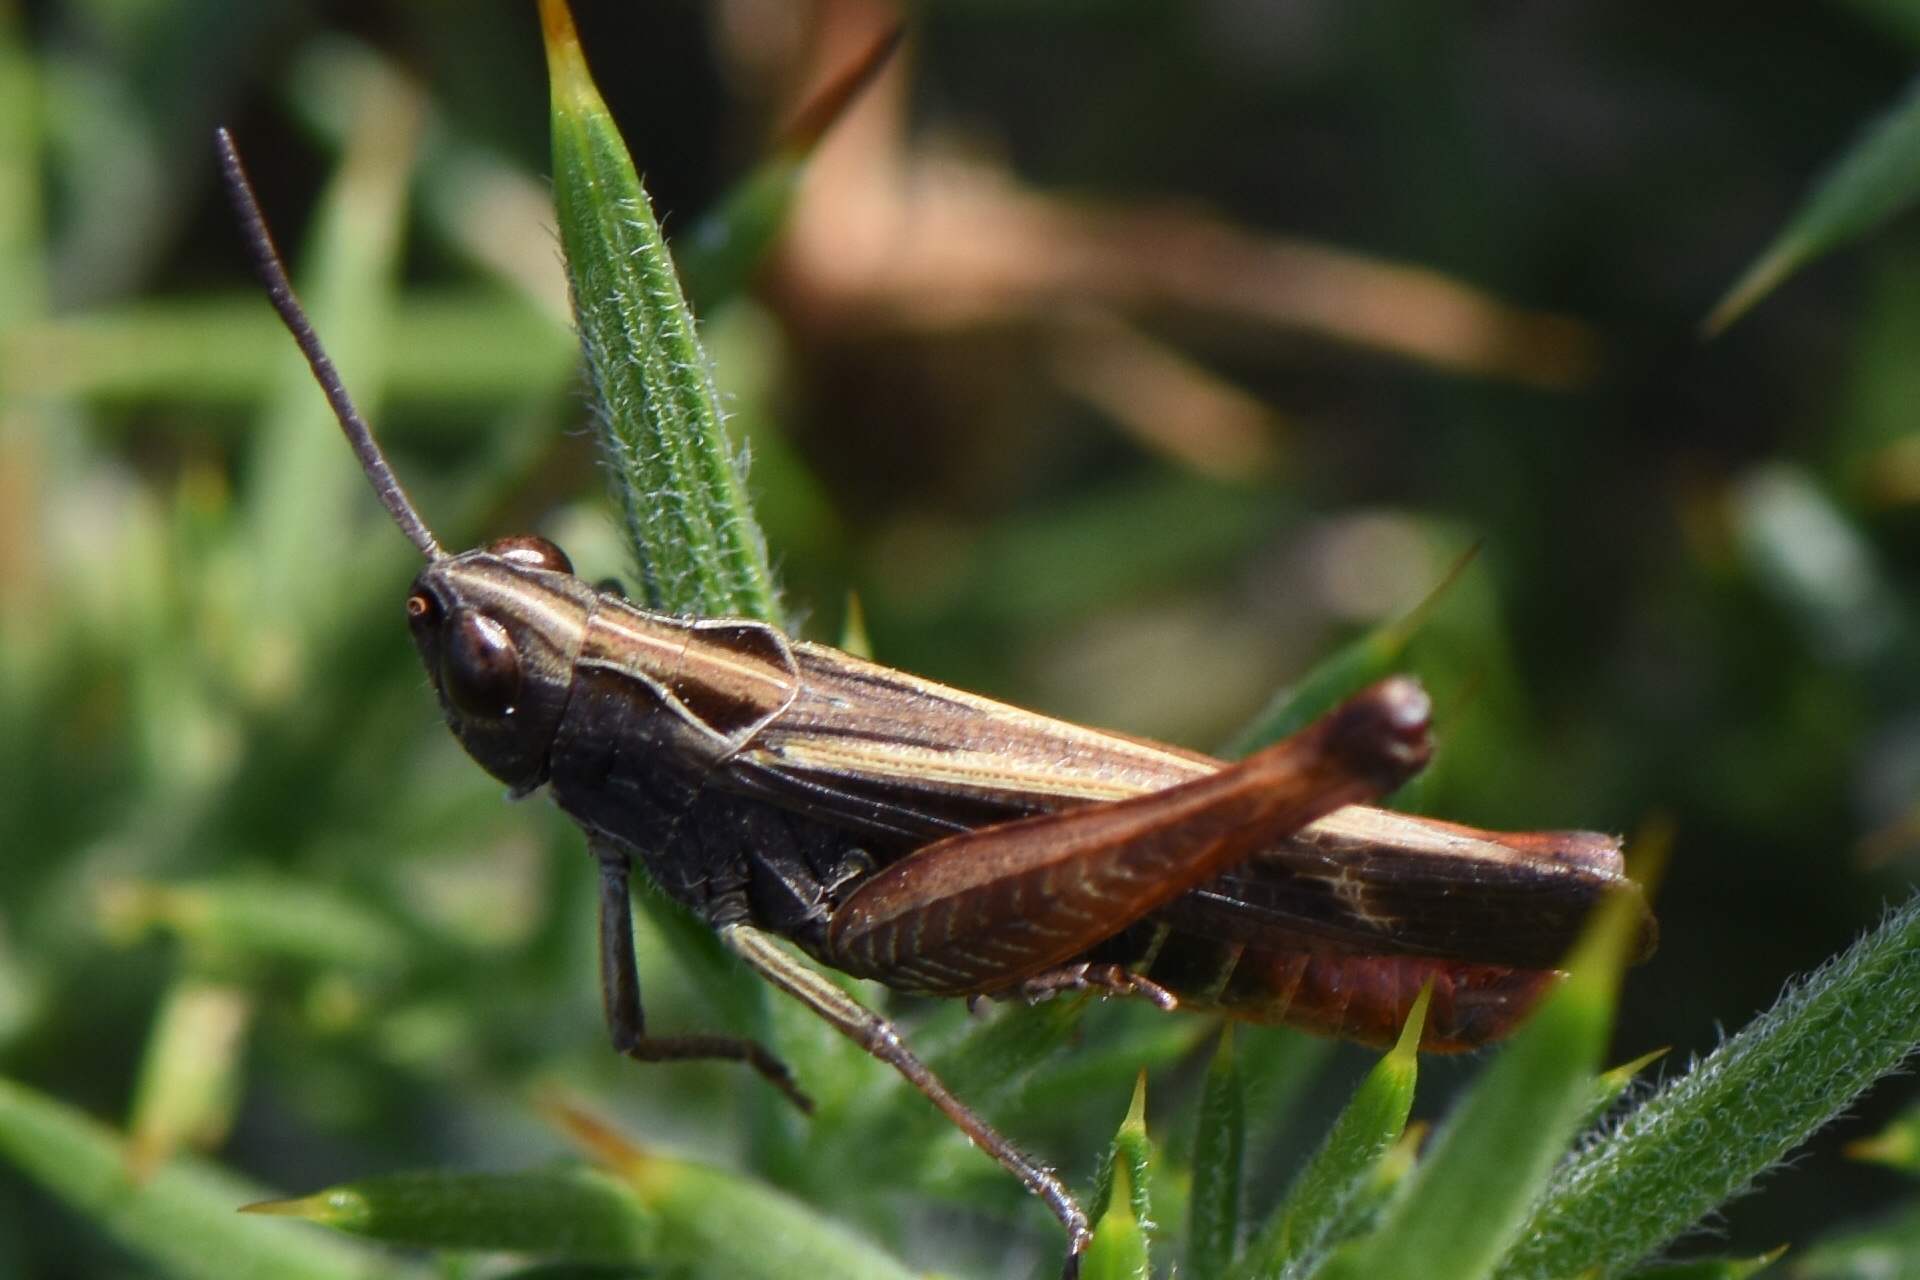 NaturePlus: Heath Grasshopper?